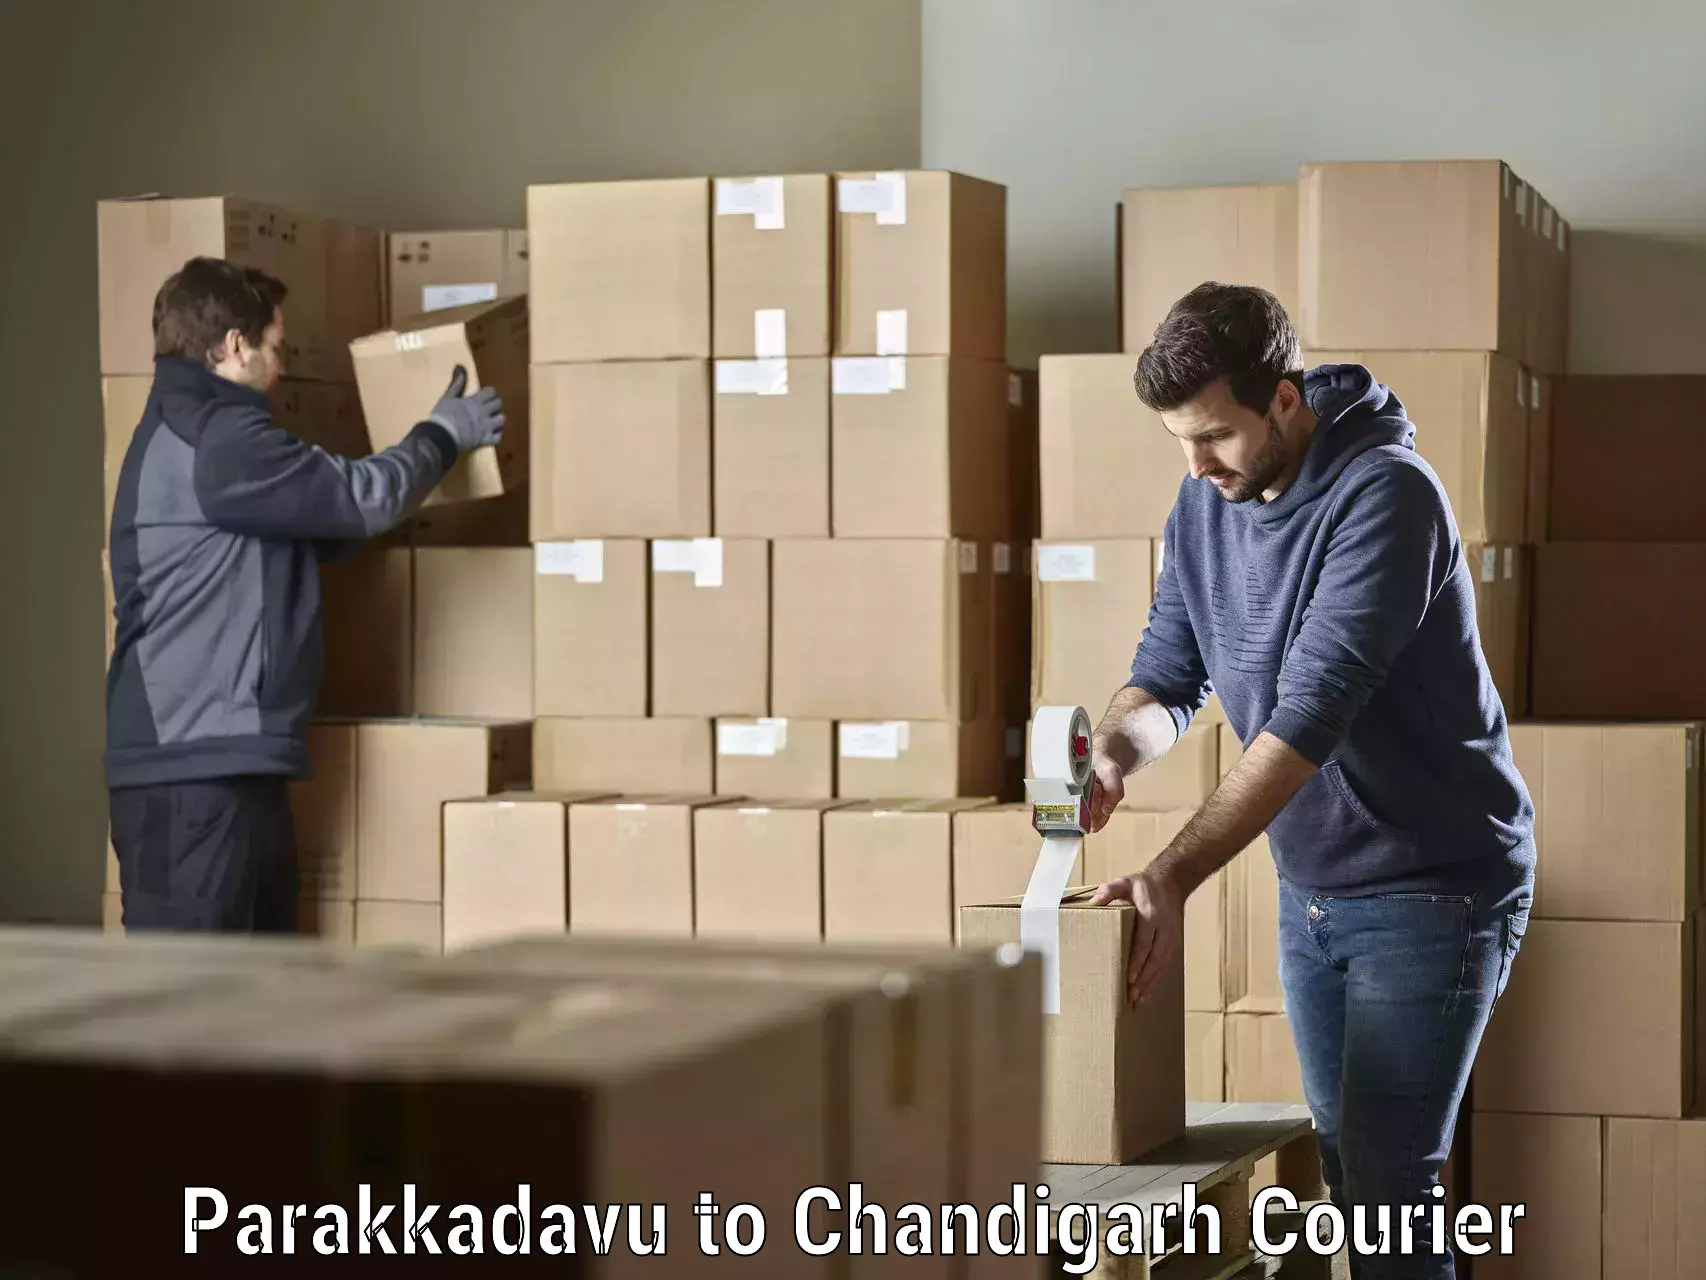 Shipping and handling Parakkadavu to Kharar